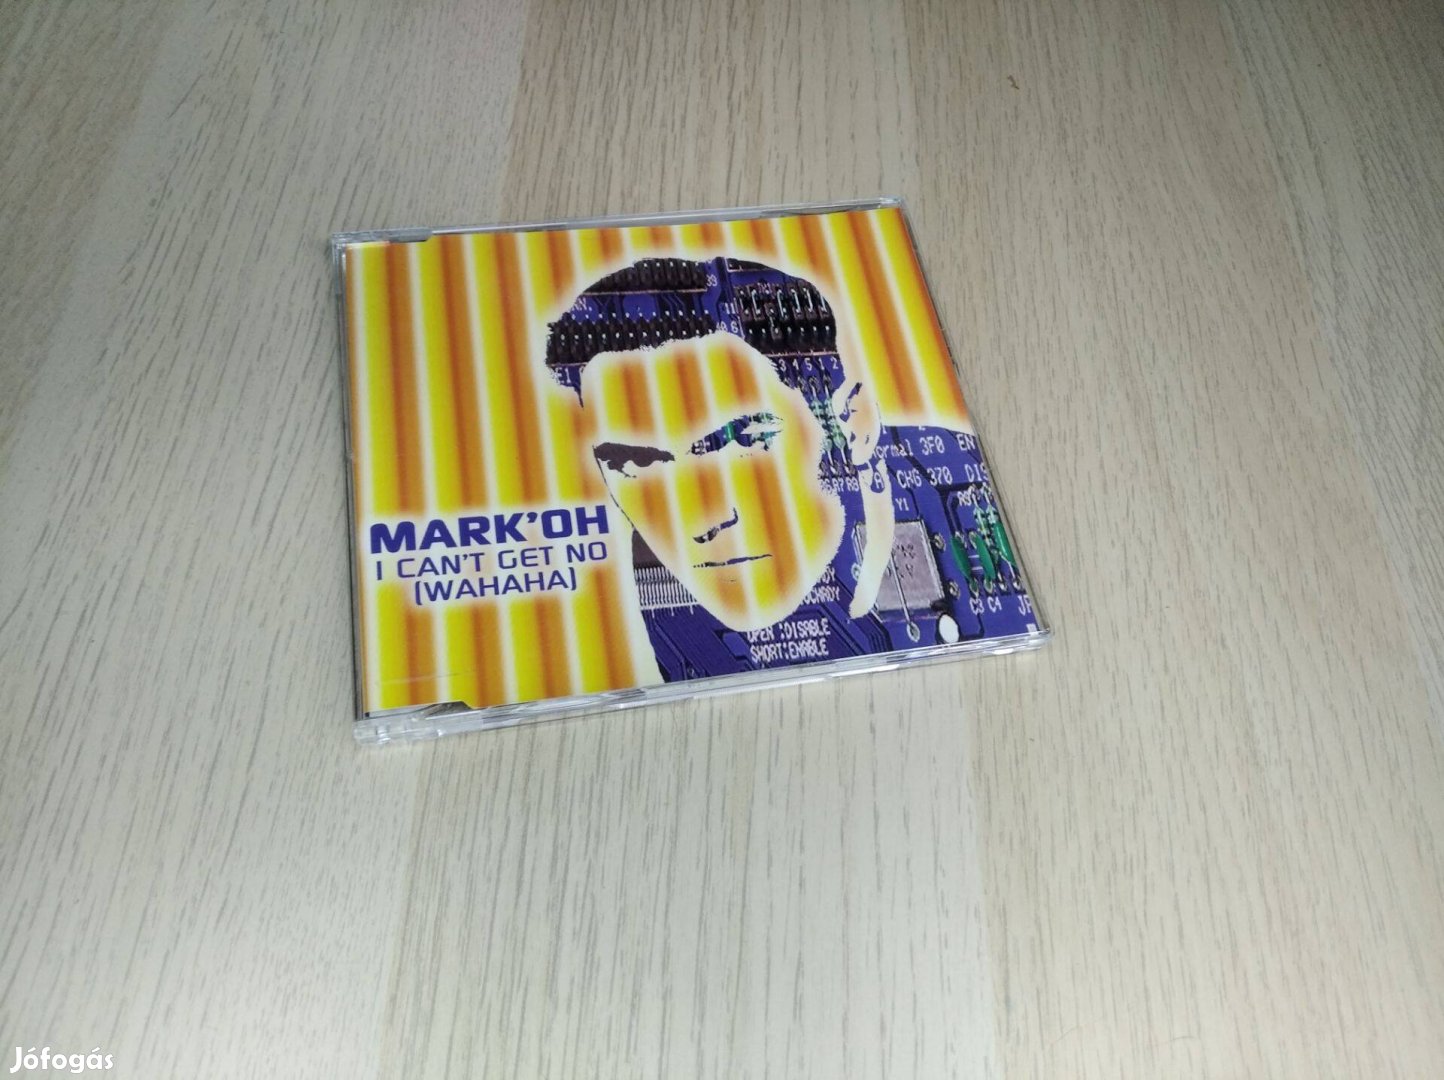 Mark 'Oh - I Can't Get No (Wahaha) Maxi CD 1995